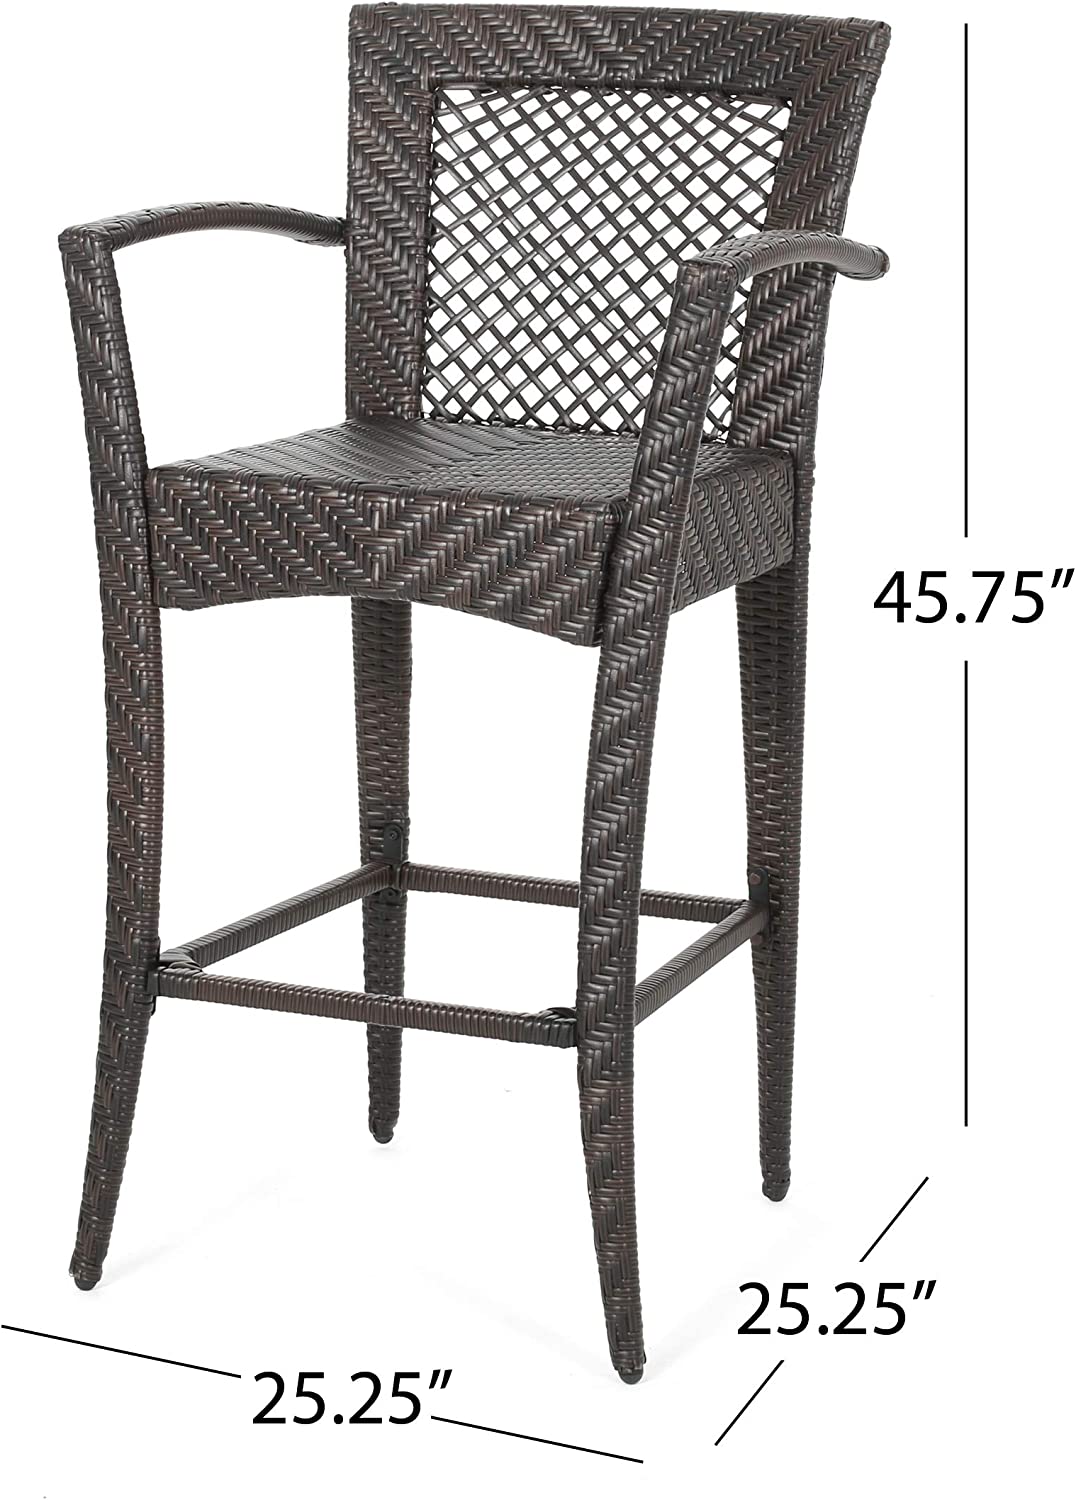 Dreamline Outdoor Bar Chair Garden Patio Bar stool 2 Chairs For Balcony (BROWN)